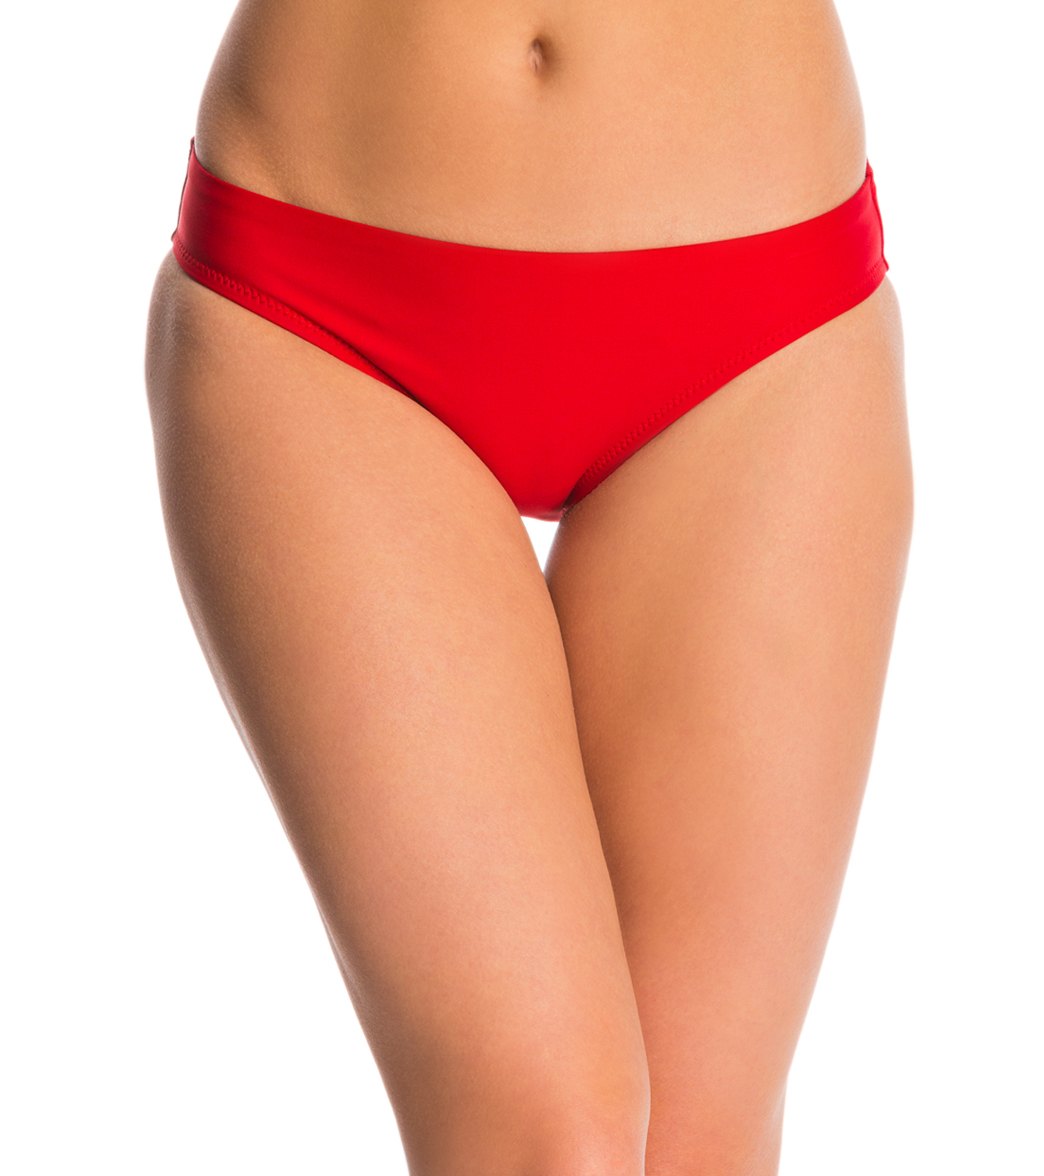 Helen Jon Del Mar Solid Classic Hipster Bikini Bottom - Crimson Xl - Swimoutlet.com